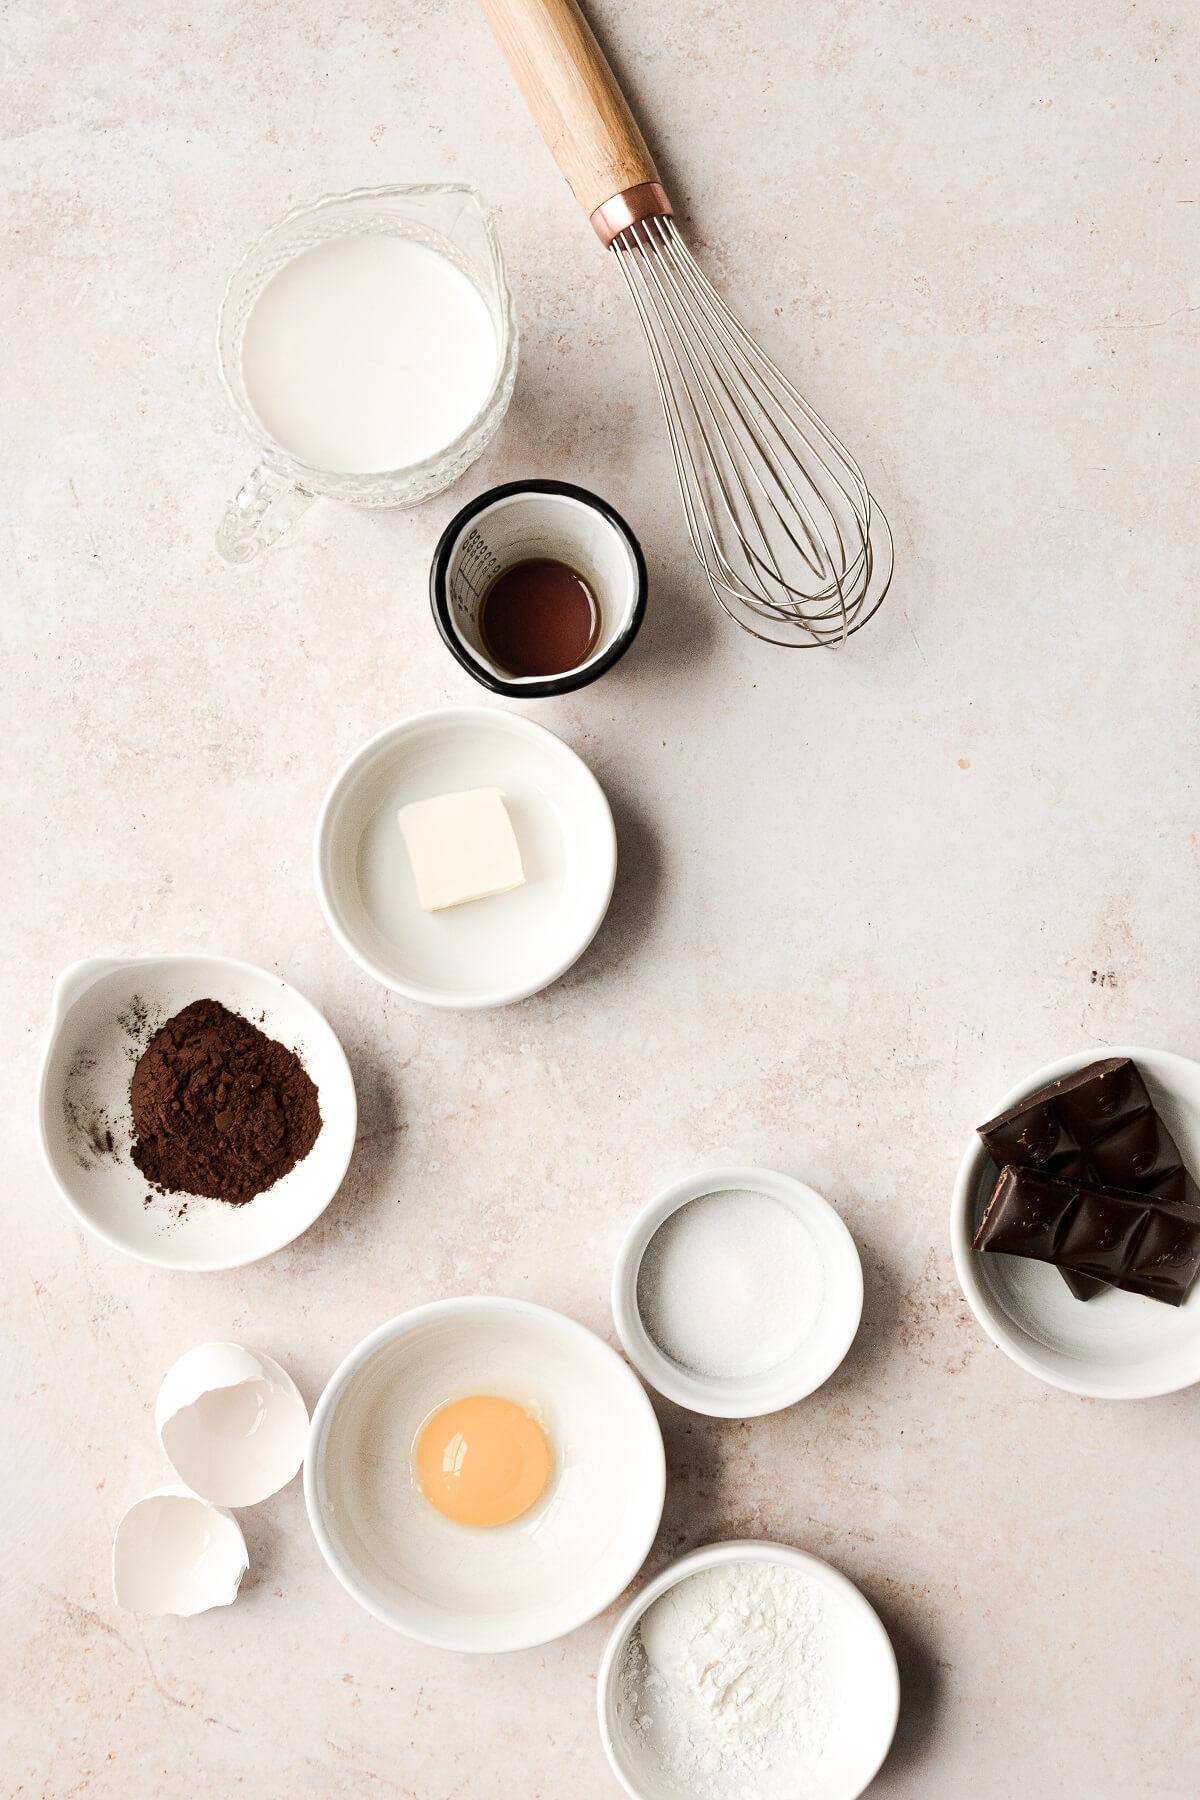 Ingredients for making chocolate custard.